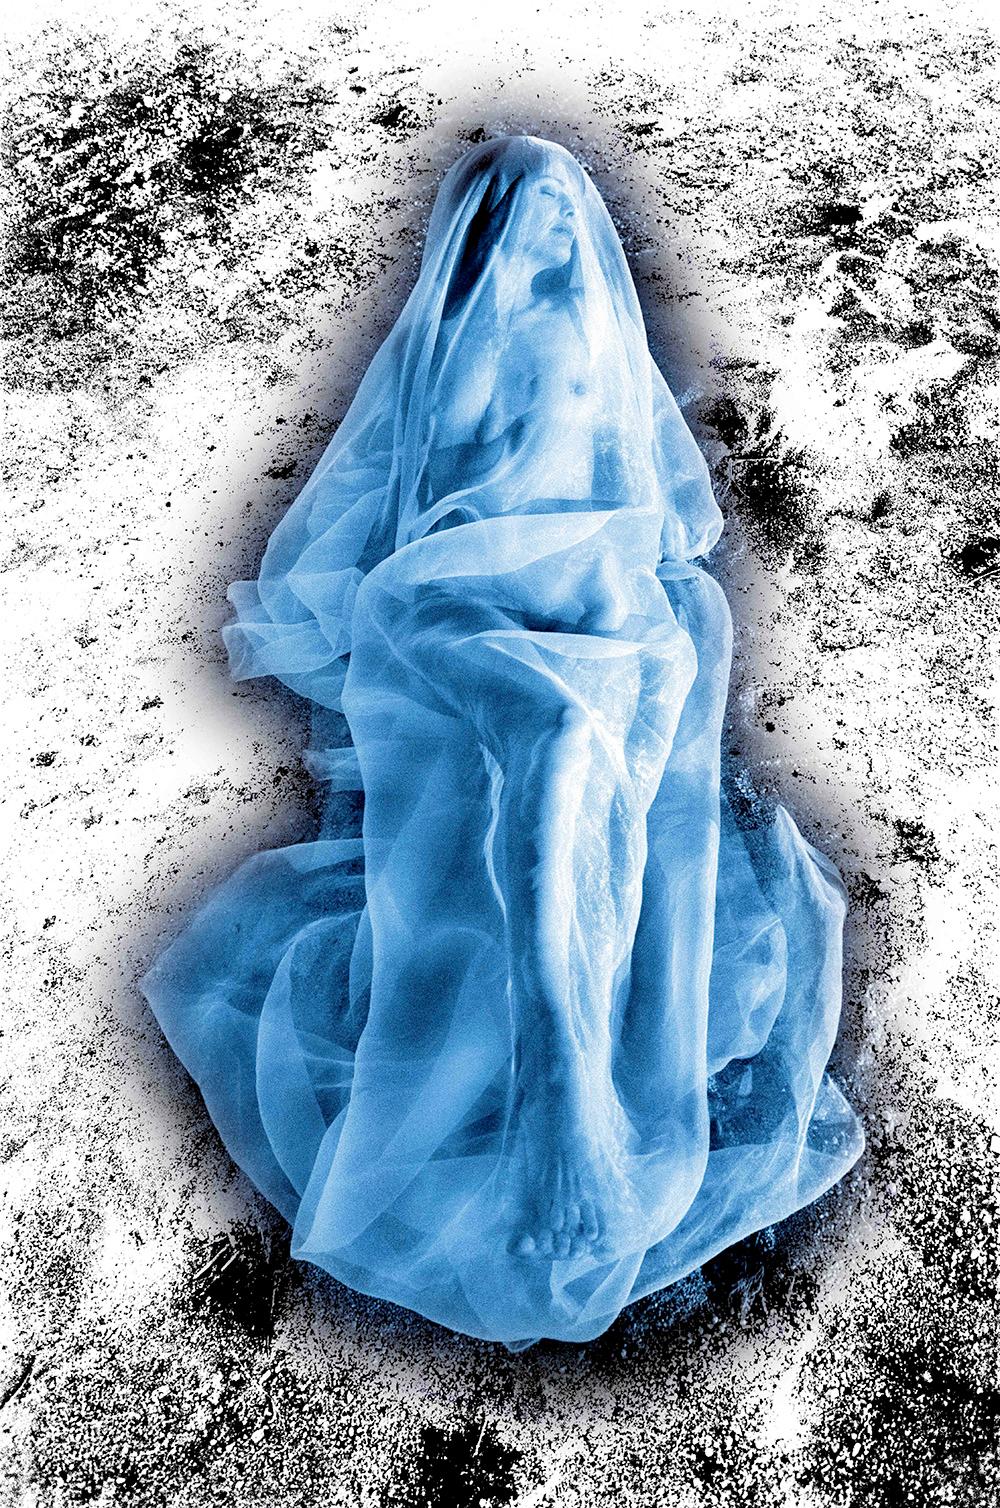 « Wrapped Series Untitled #10 » Photographie d'art 1/10 de Robert Mack  